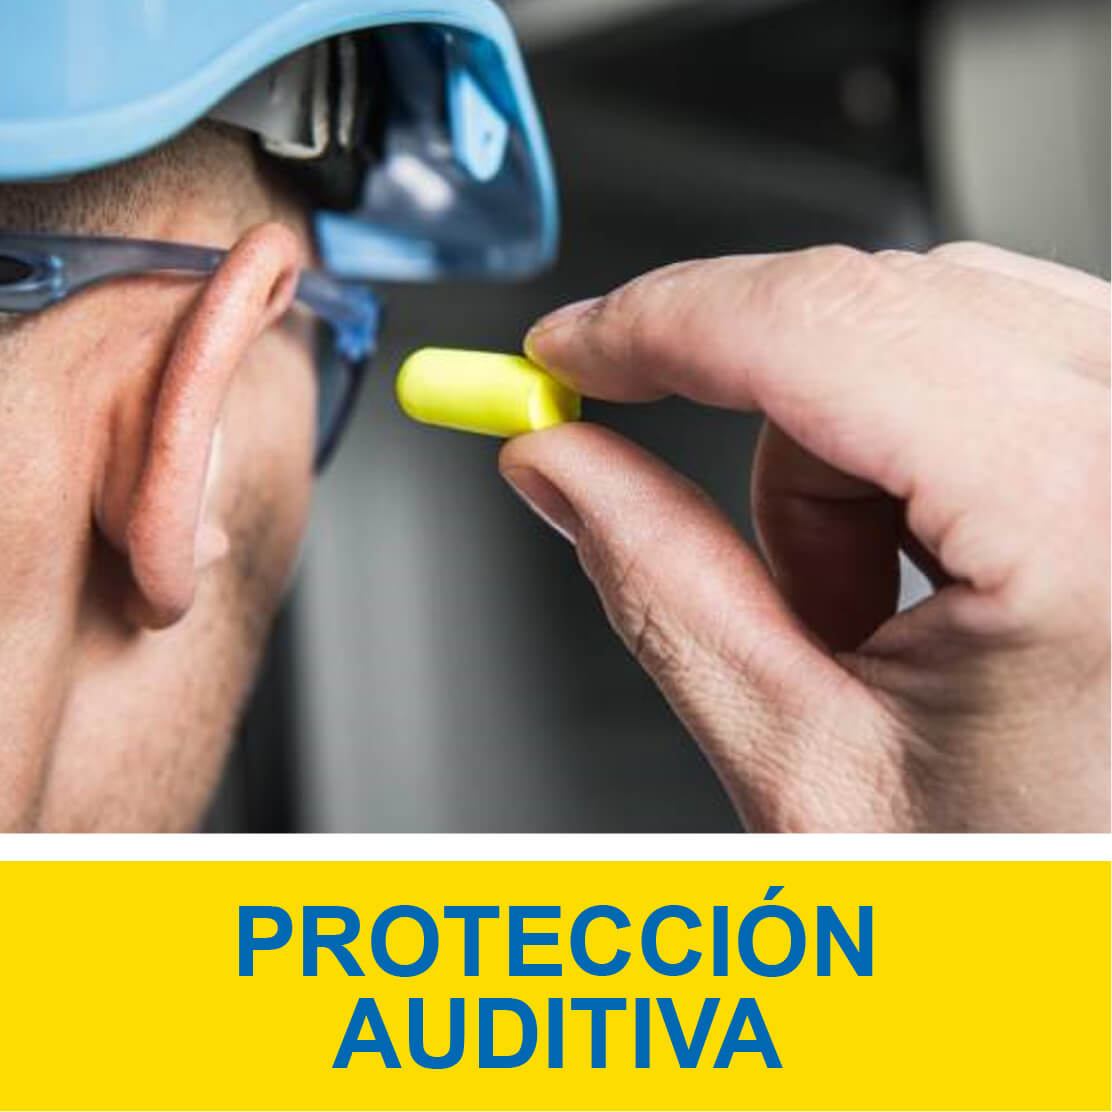 Proteccion auditiva Panama